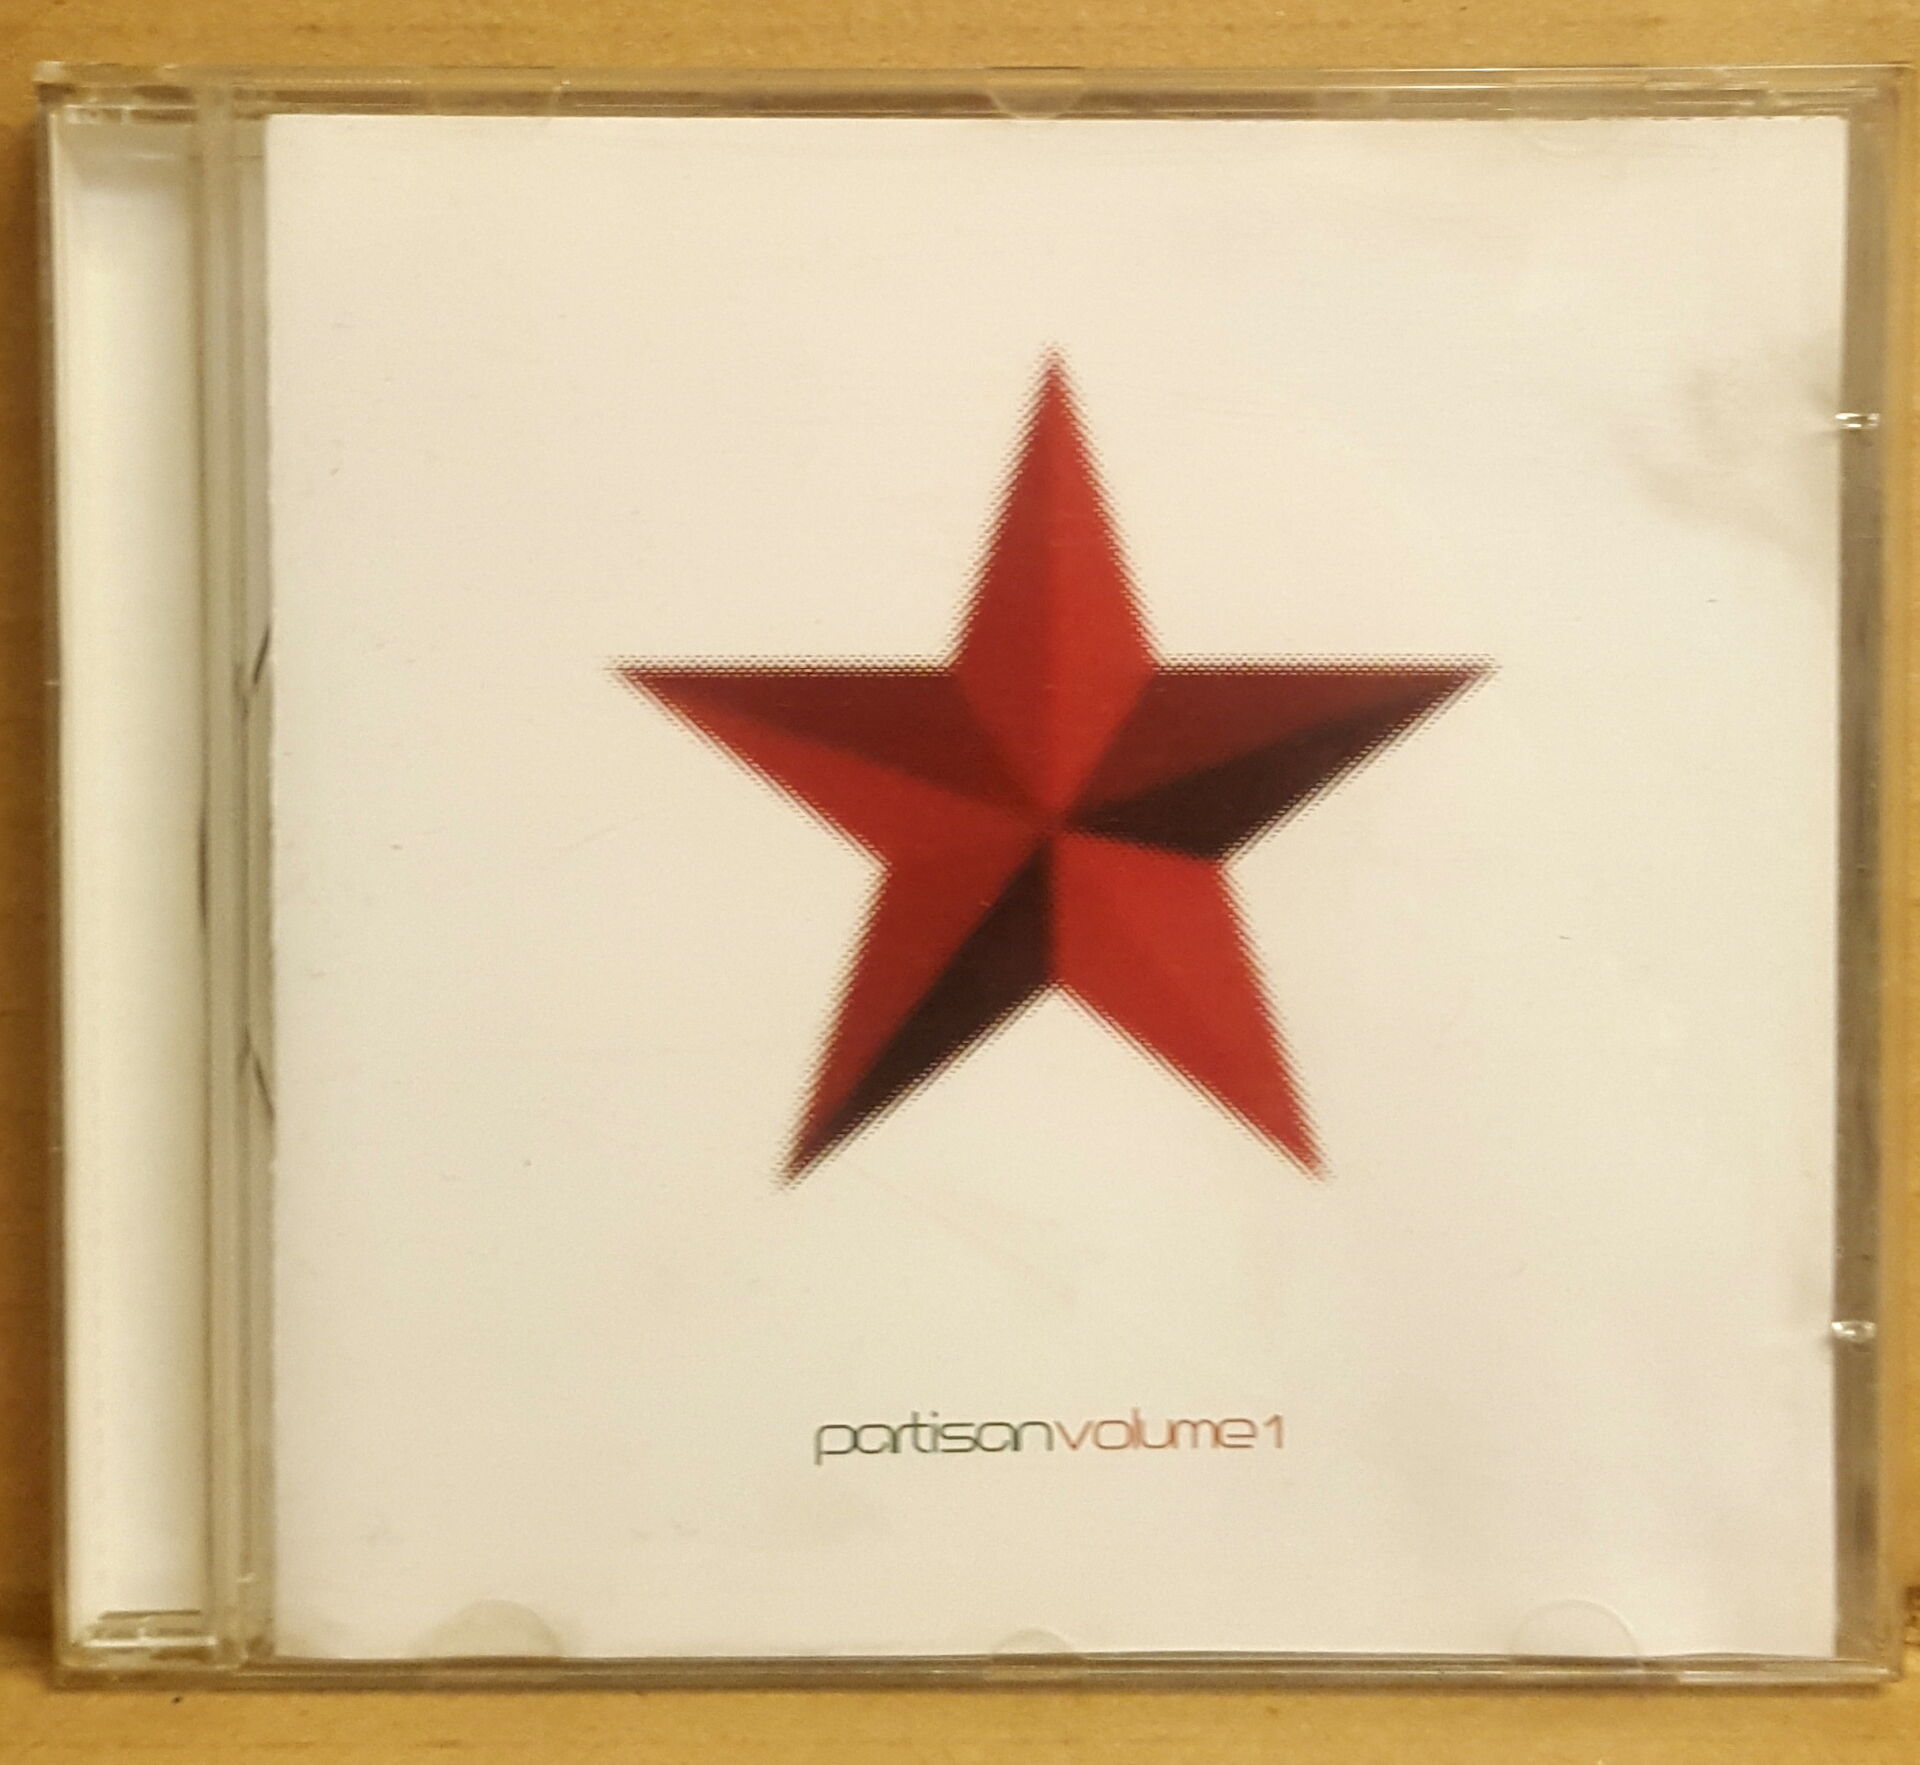 PARTISAN VOLUME 1 - VARIOUS ARTISTS DRUM'N'BASS (1998) - CD COMPILATION 2.EL